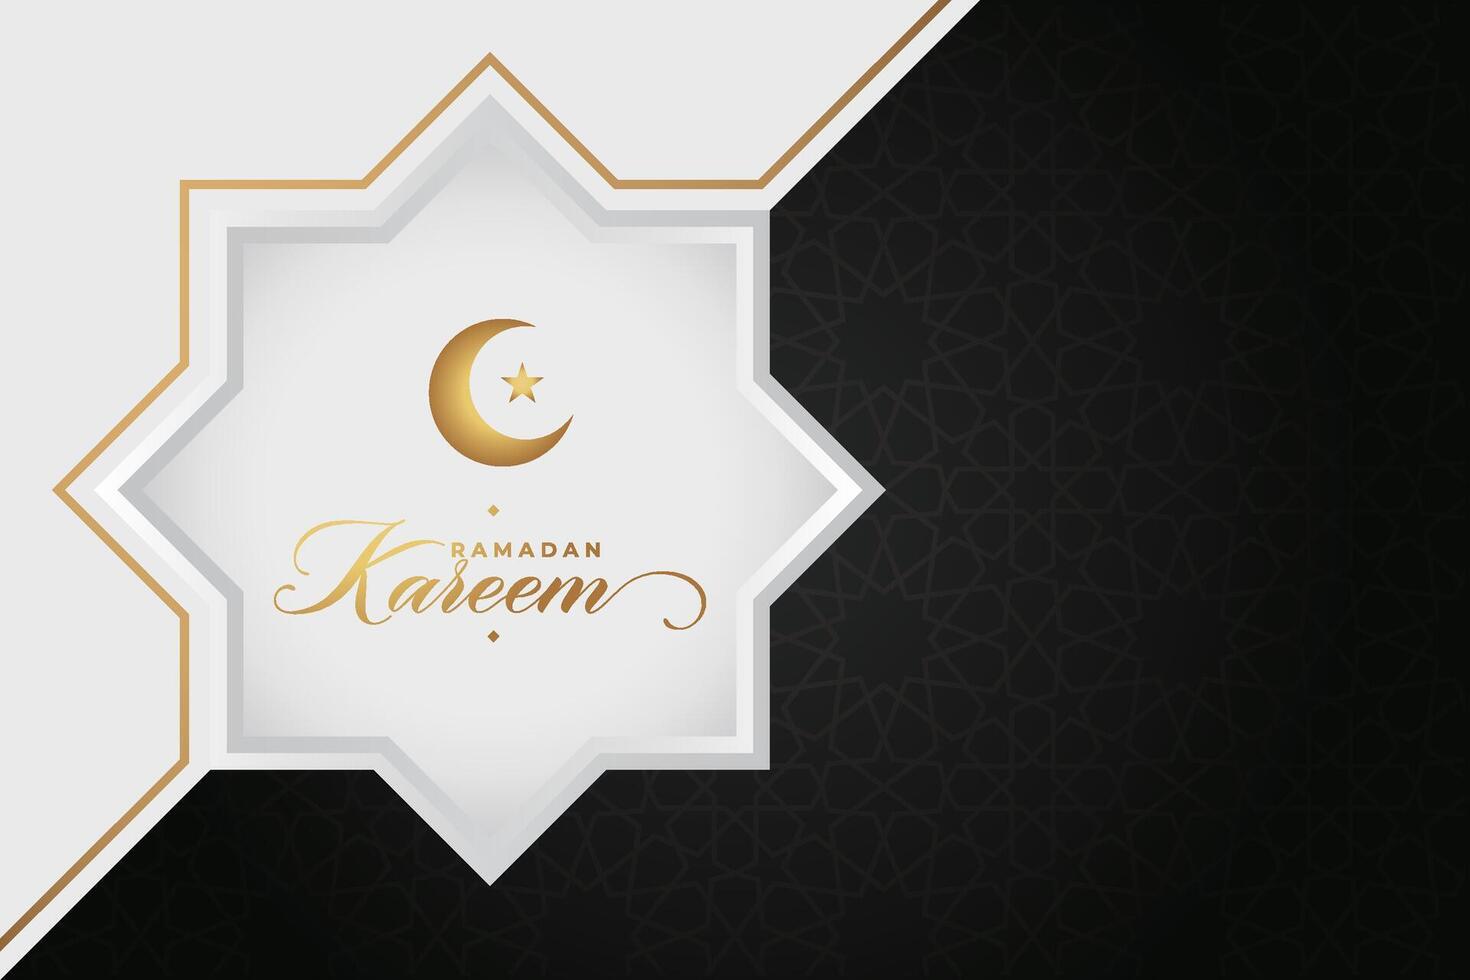 vettore elegante lussuoso Ramadan, eid al-fitr, islamico sfondo decorativo saluto carta